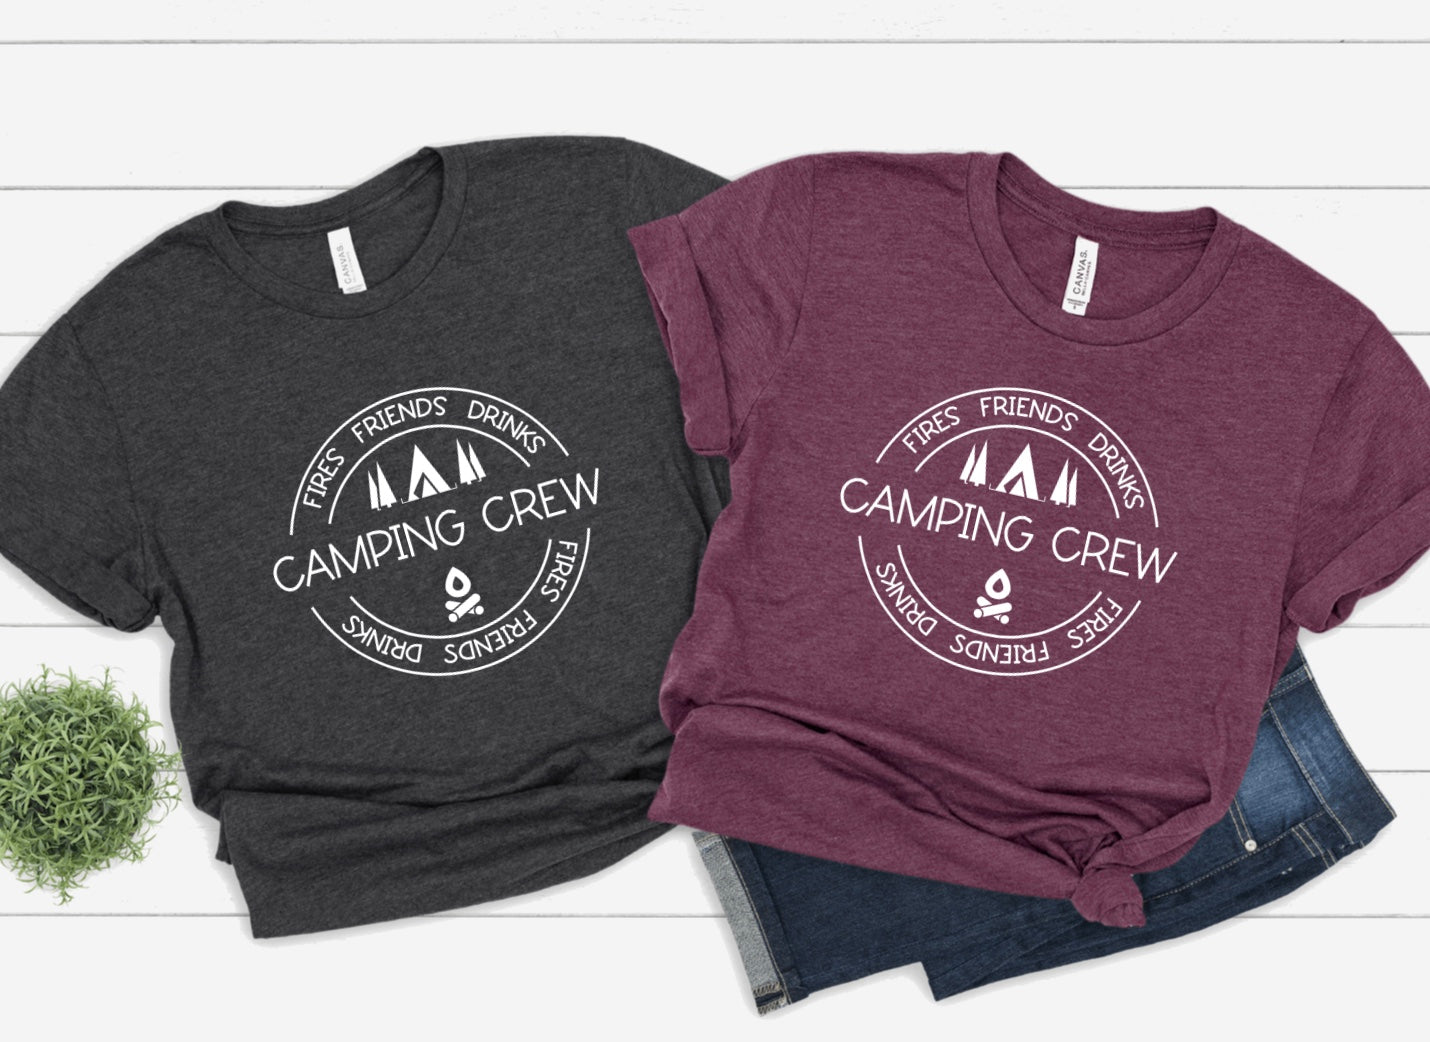 Camping crew t-shirt 